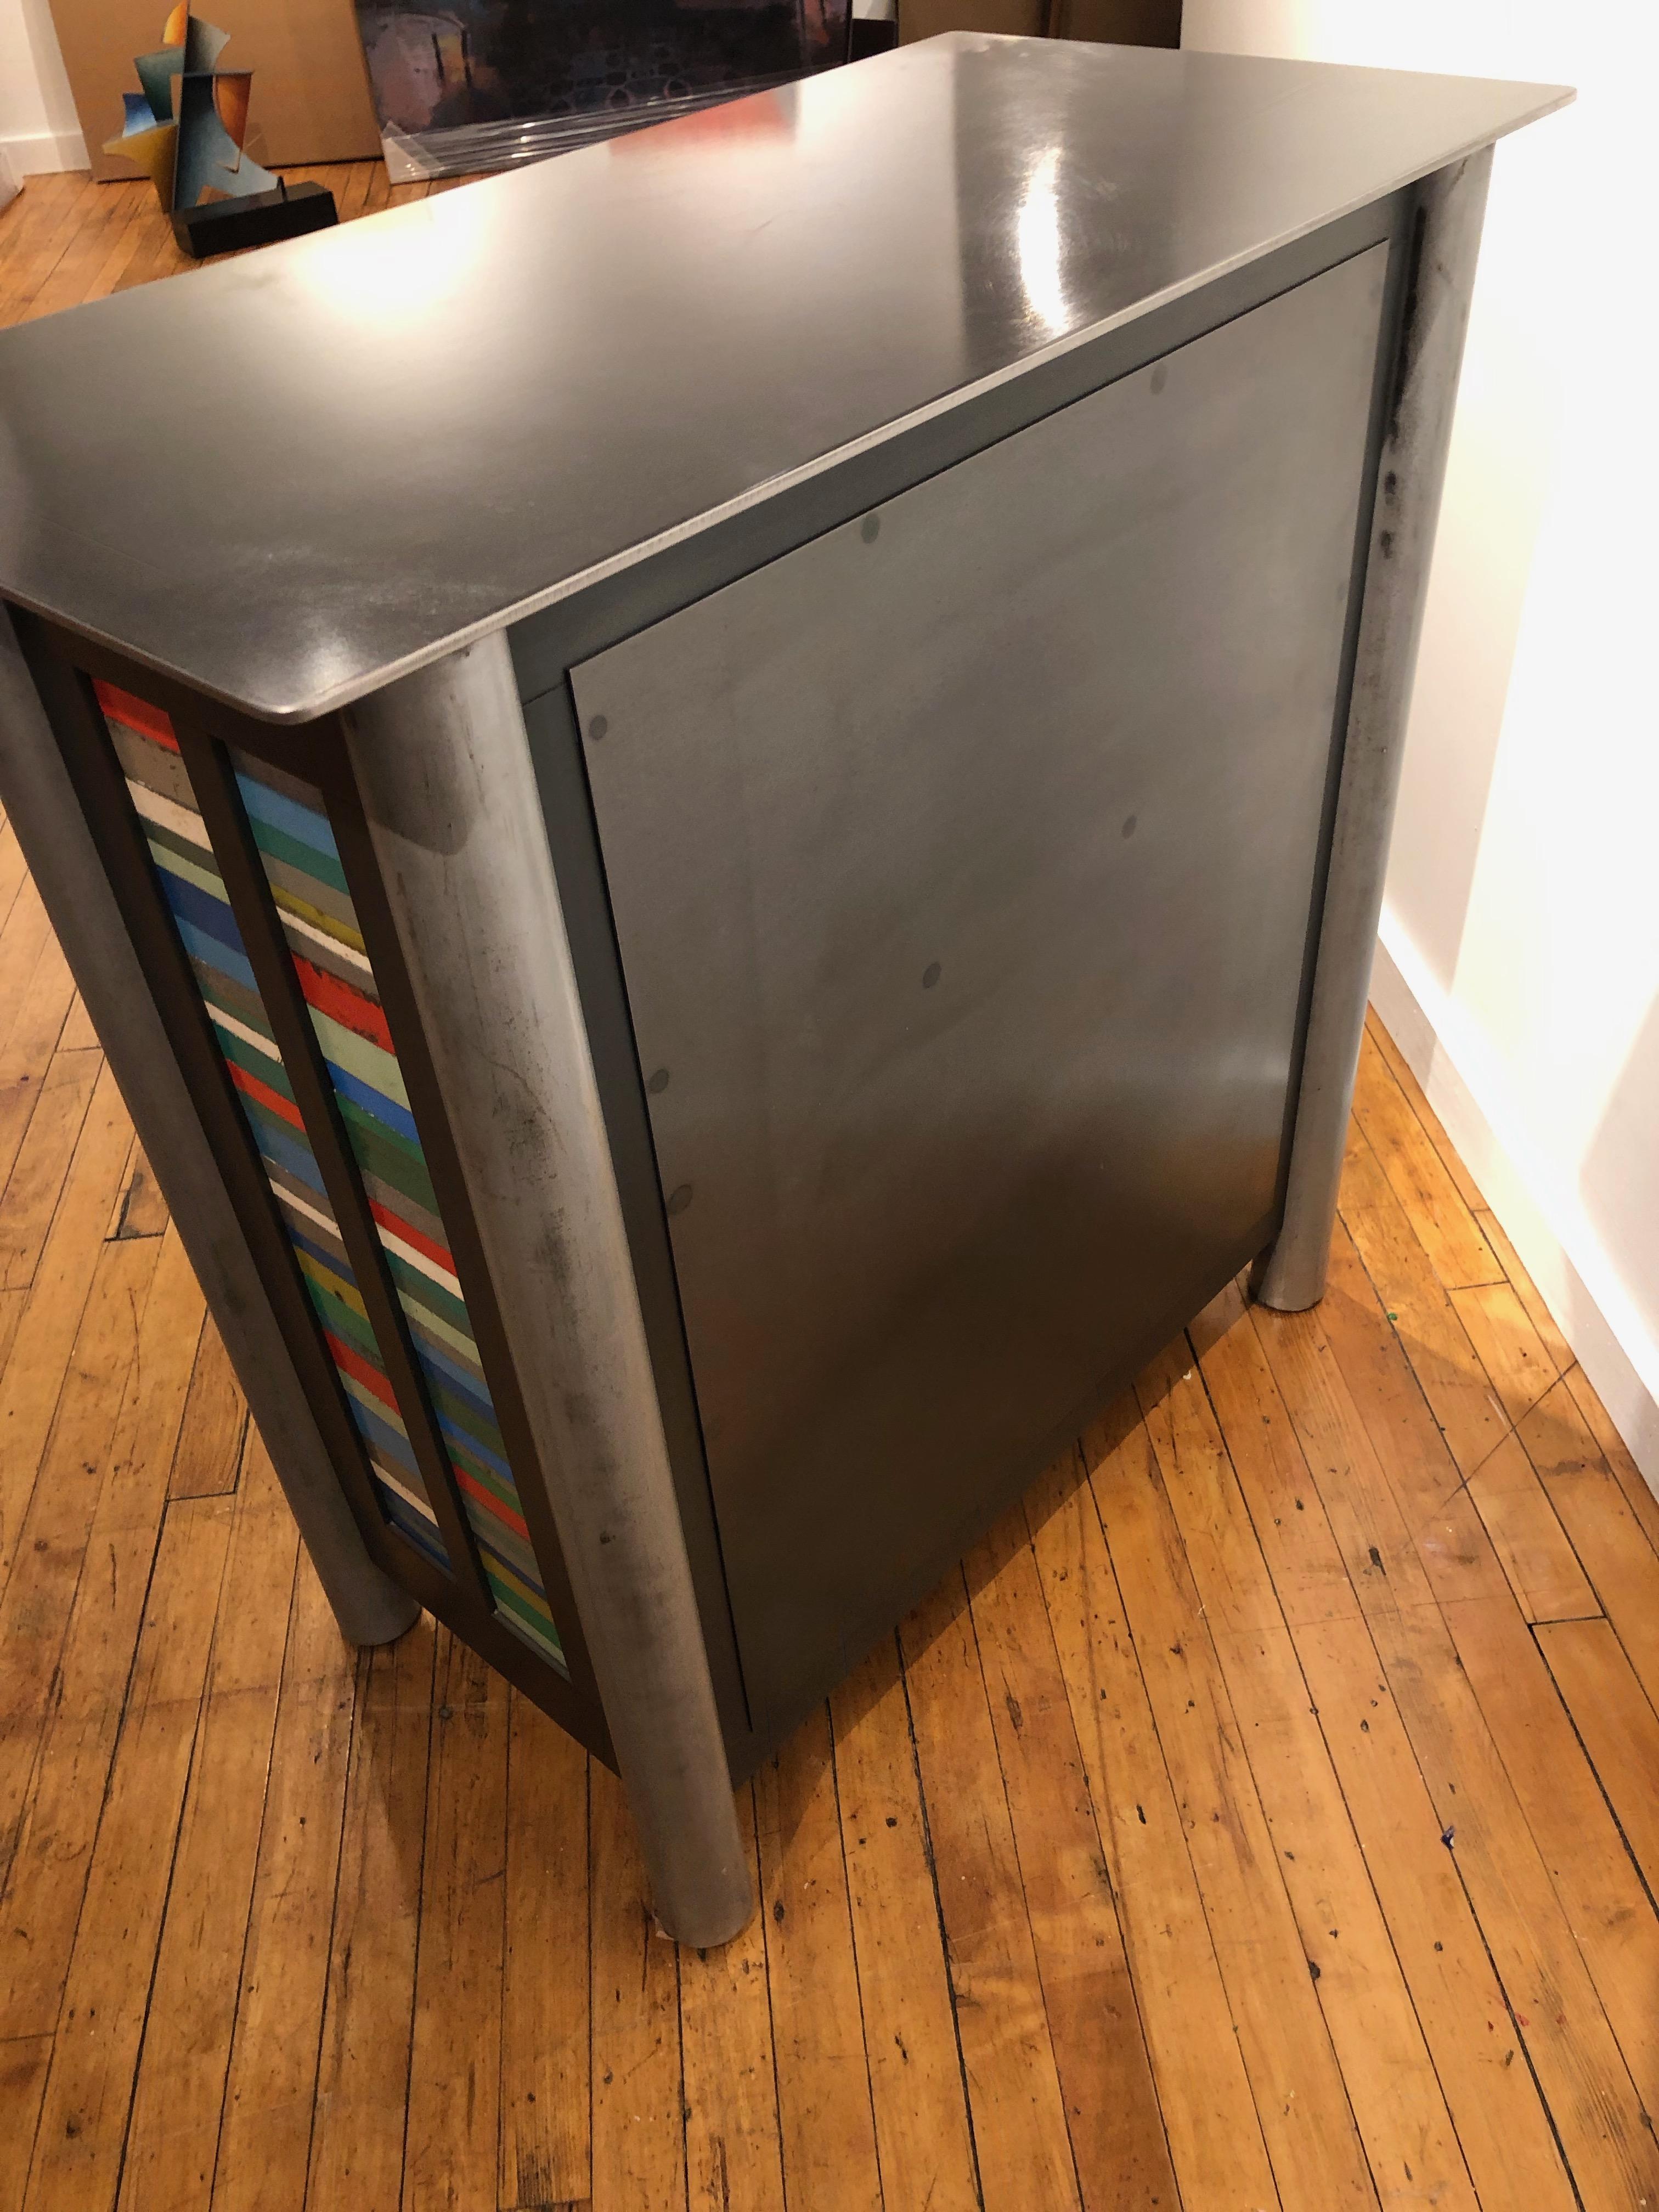 Welded Jim Rose Two-Door Strips Quilt Cupboard, Brightly Colored Steel Art Furniture